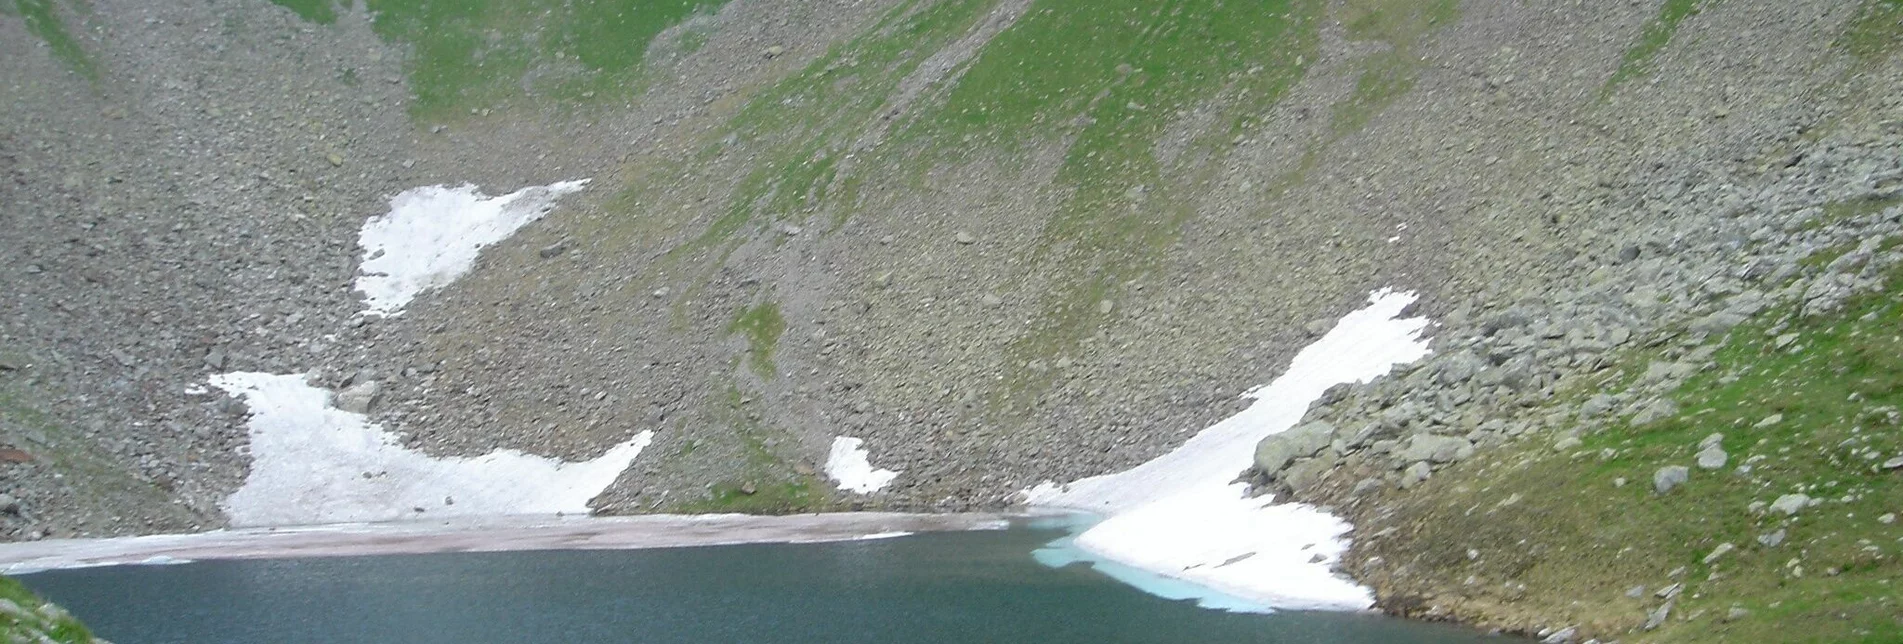 Mountain Hike Frozen lake - Touren-Impression #1 | © Erlebnisregion Murtal